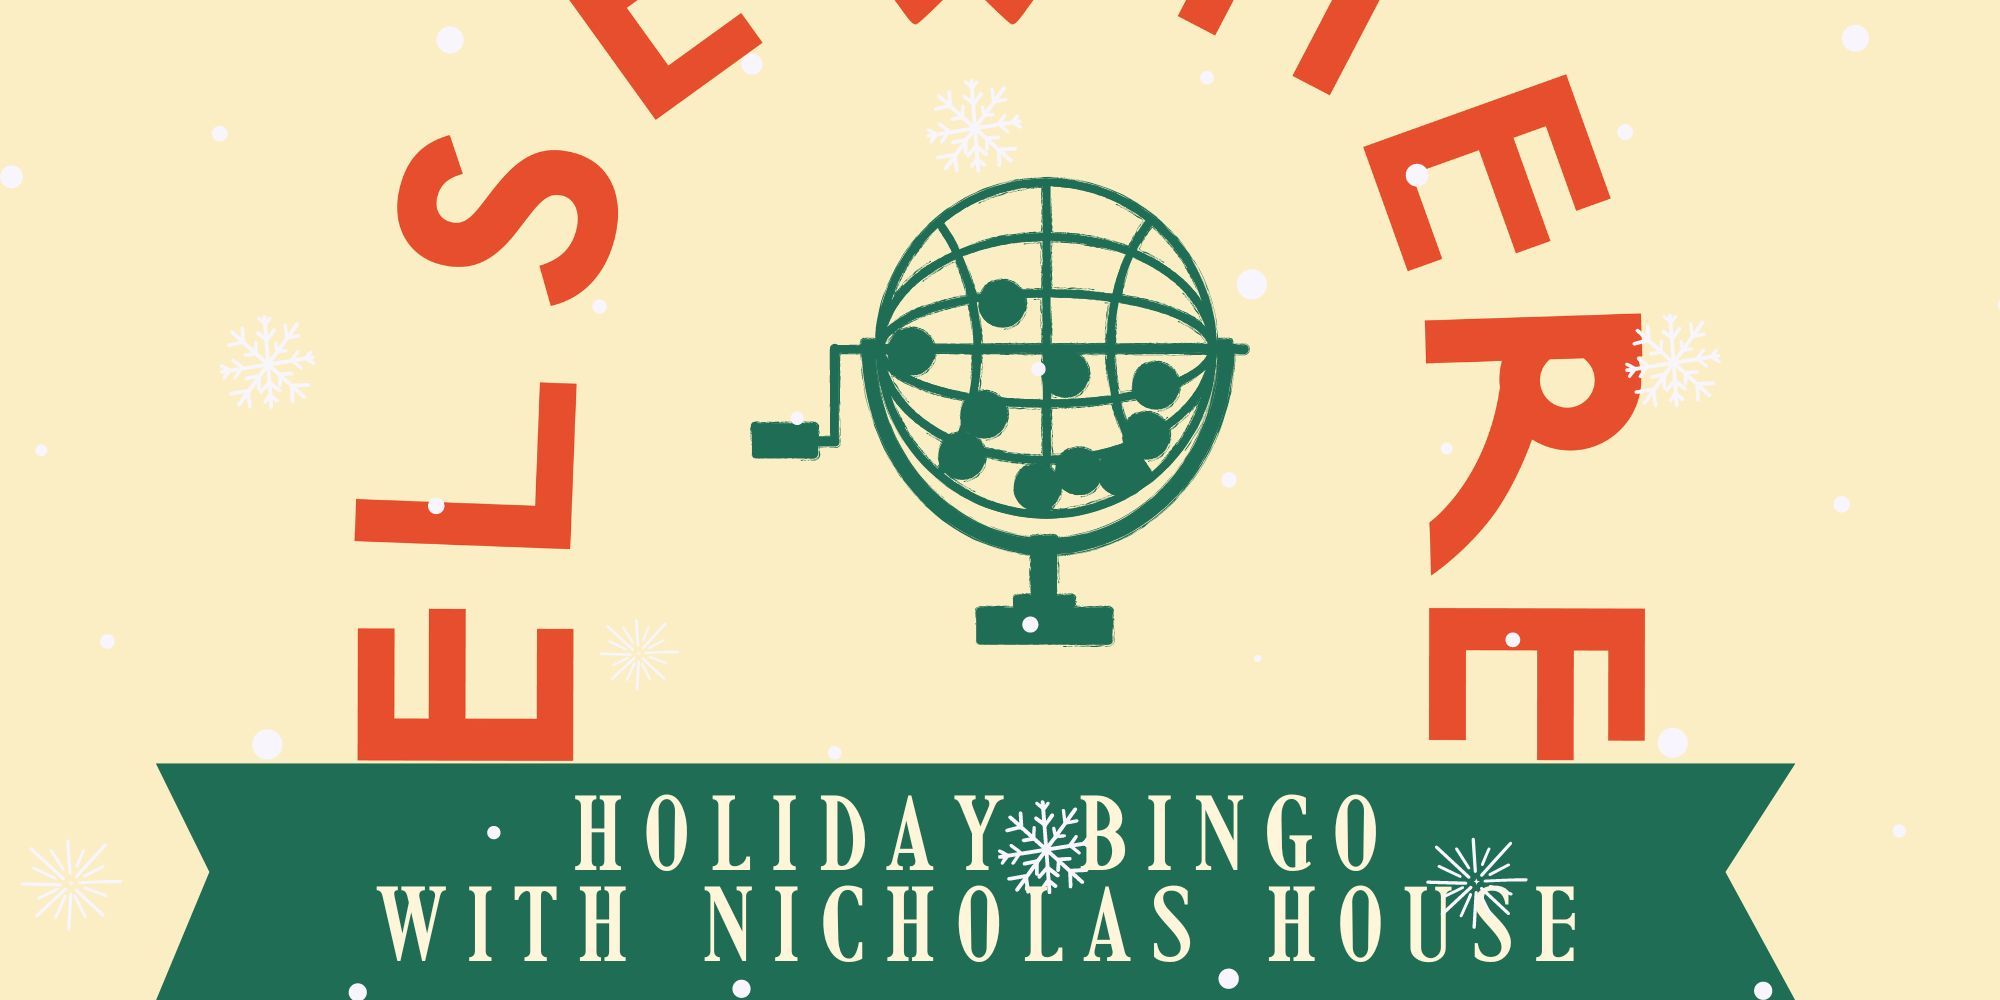 Holiday Bingo with Nicholas House promotional image